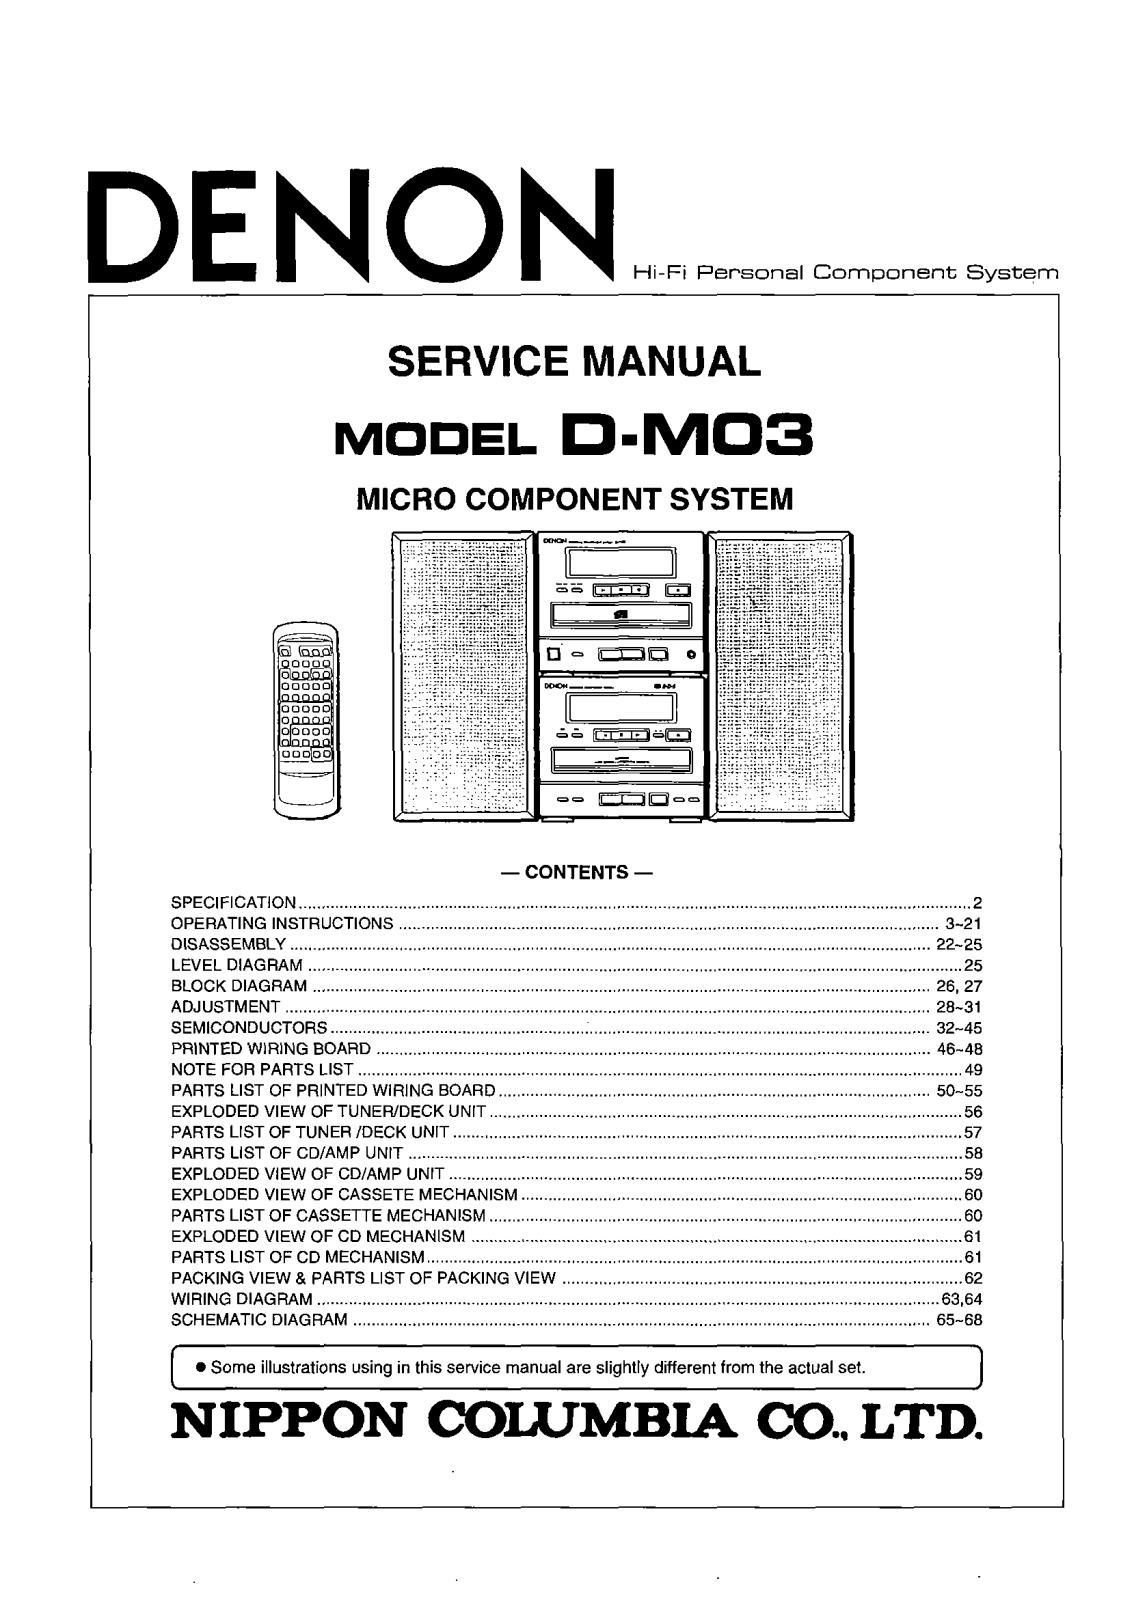 Denon D-M03 Service Manual